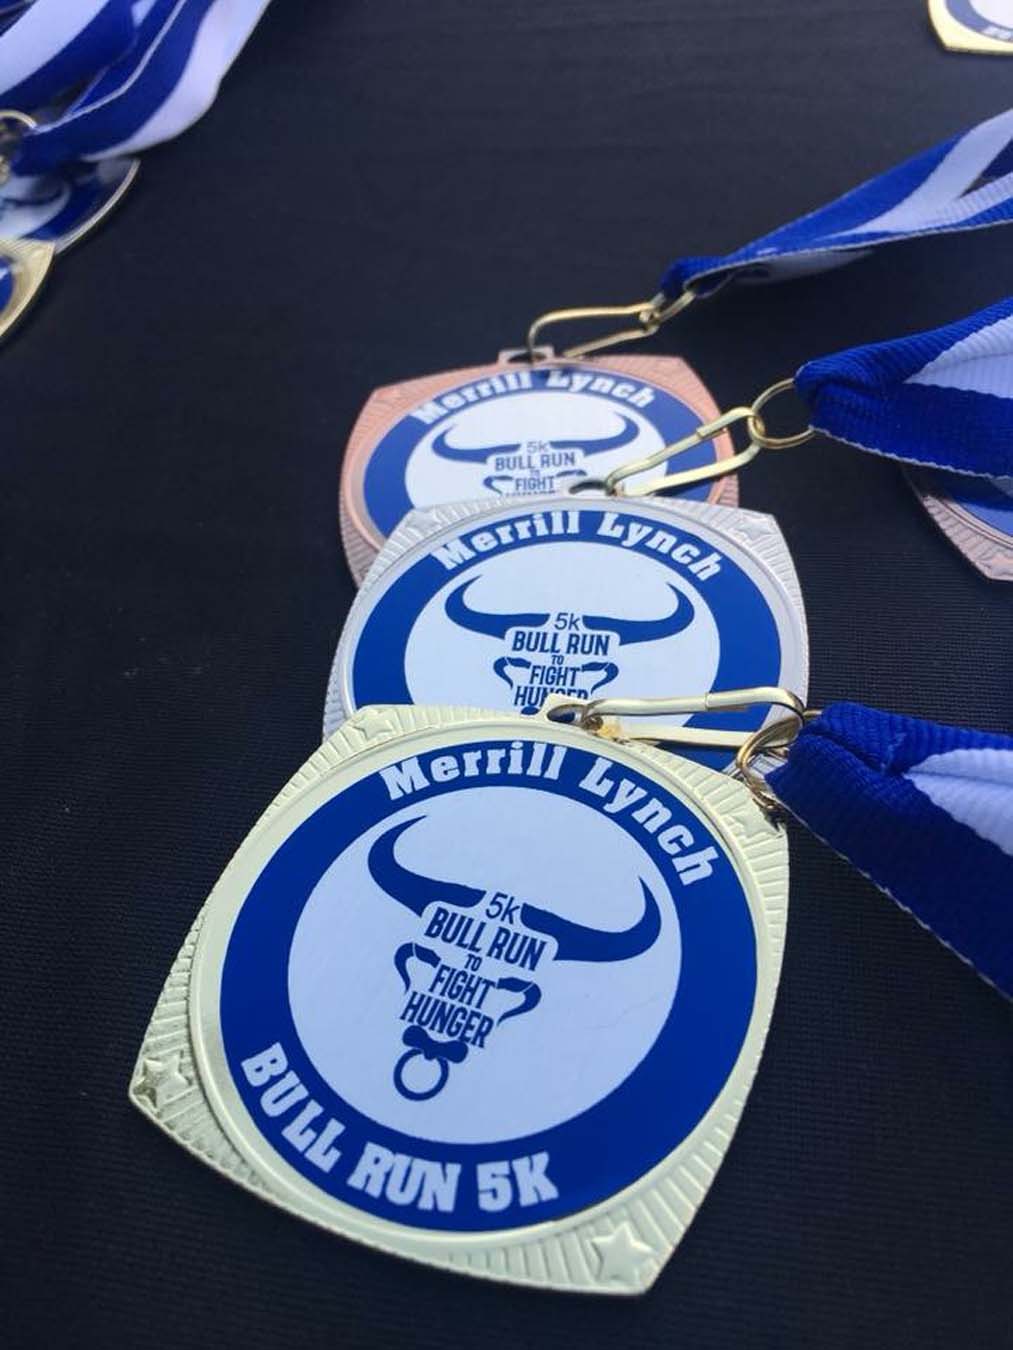 Bull Run medals